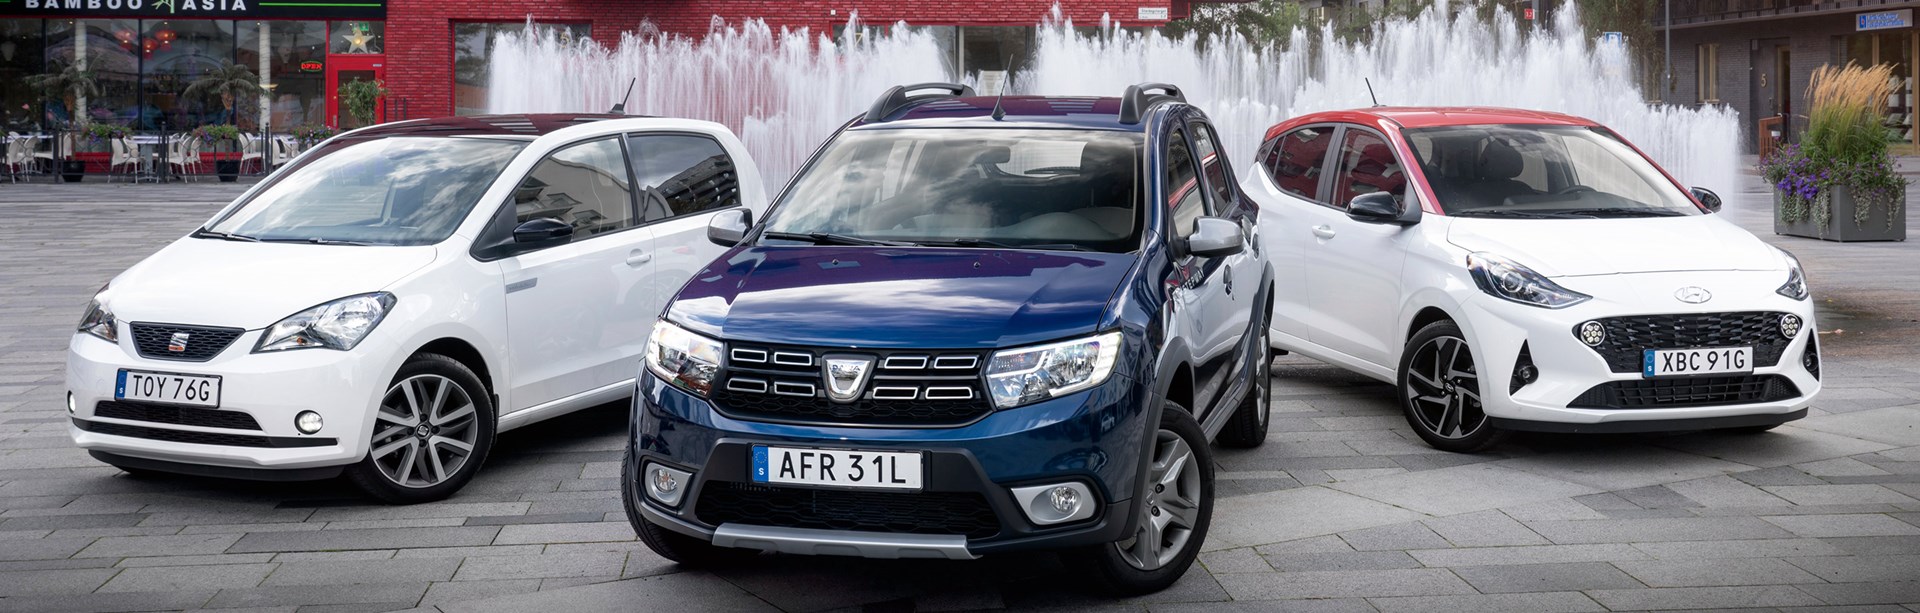 Tidningen Motor testar Dacia Sandero Stepway, Hyundai i10 och Seat Mii electric